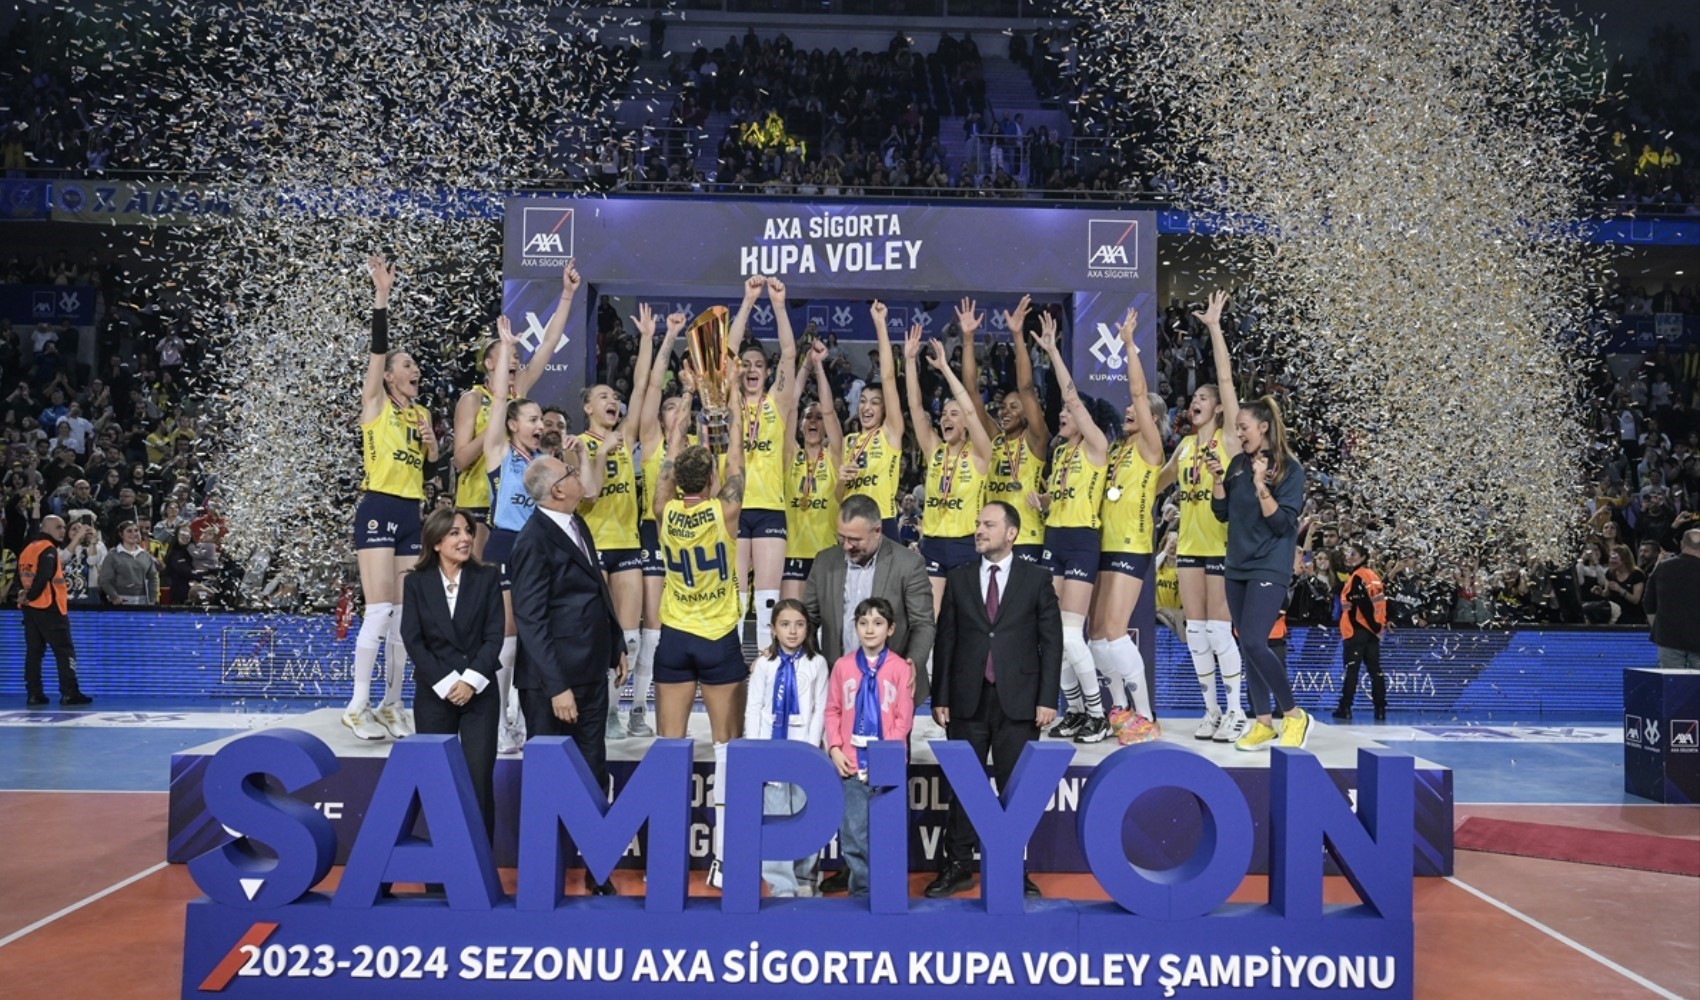 Kupa Voley şampiyonu Fenerbahçe!